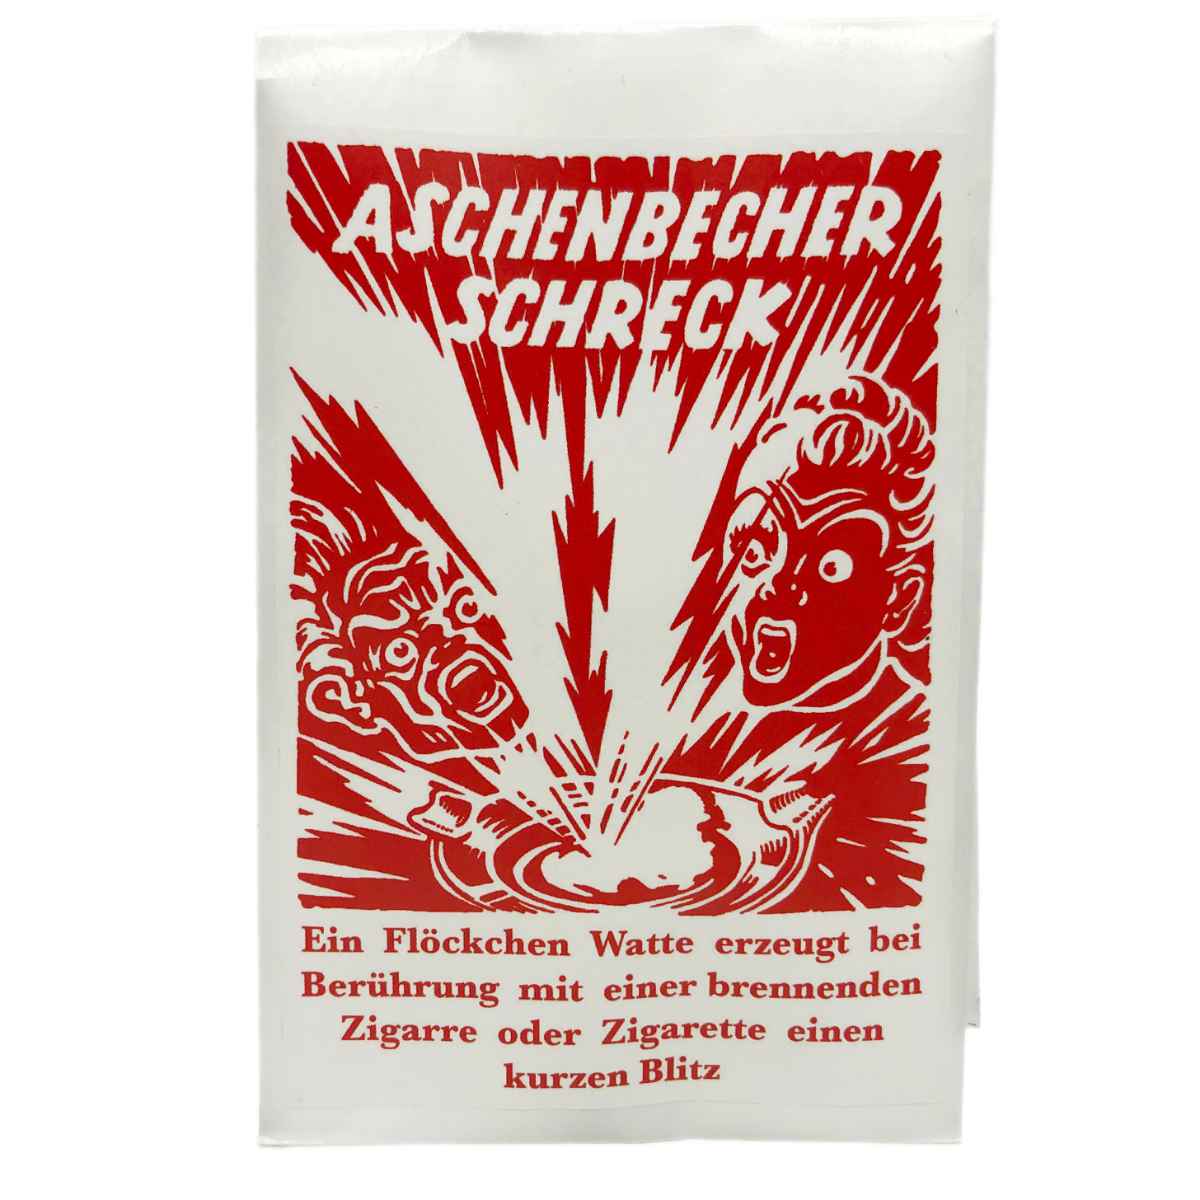 https://www.zauberkoenig-berlin.de/media/image/31/82/53/Aschenbecherschreck.jpg